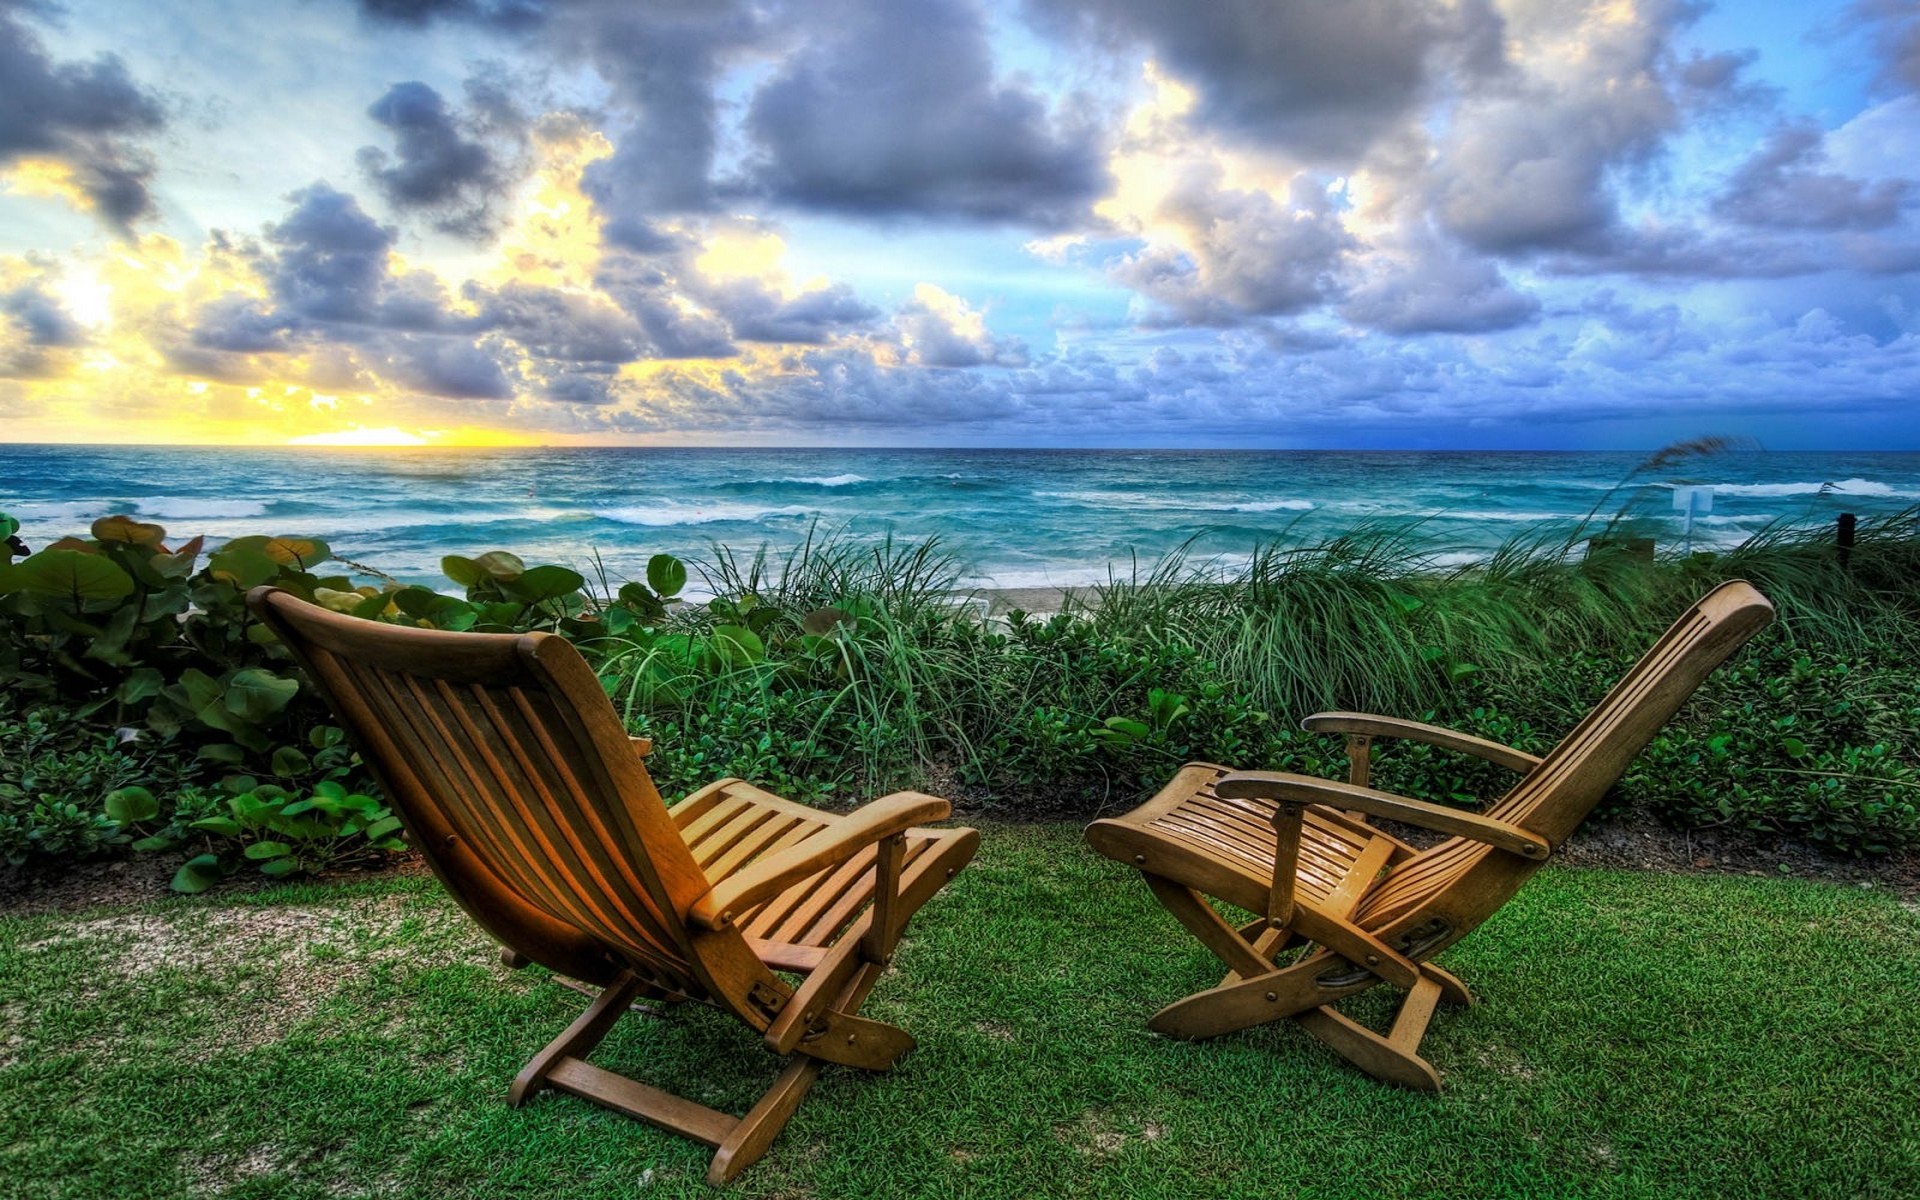 General 1920x1200 nature landscape chair beach lawns garden sunset sea clouds plants summer HDR sky horizon